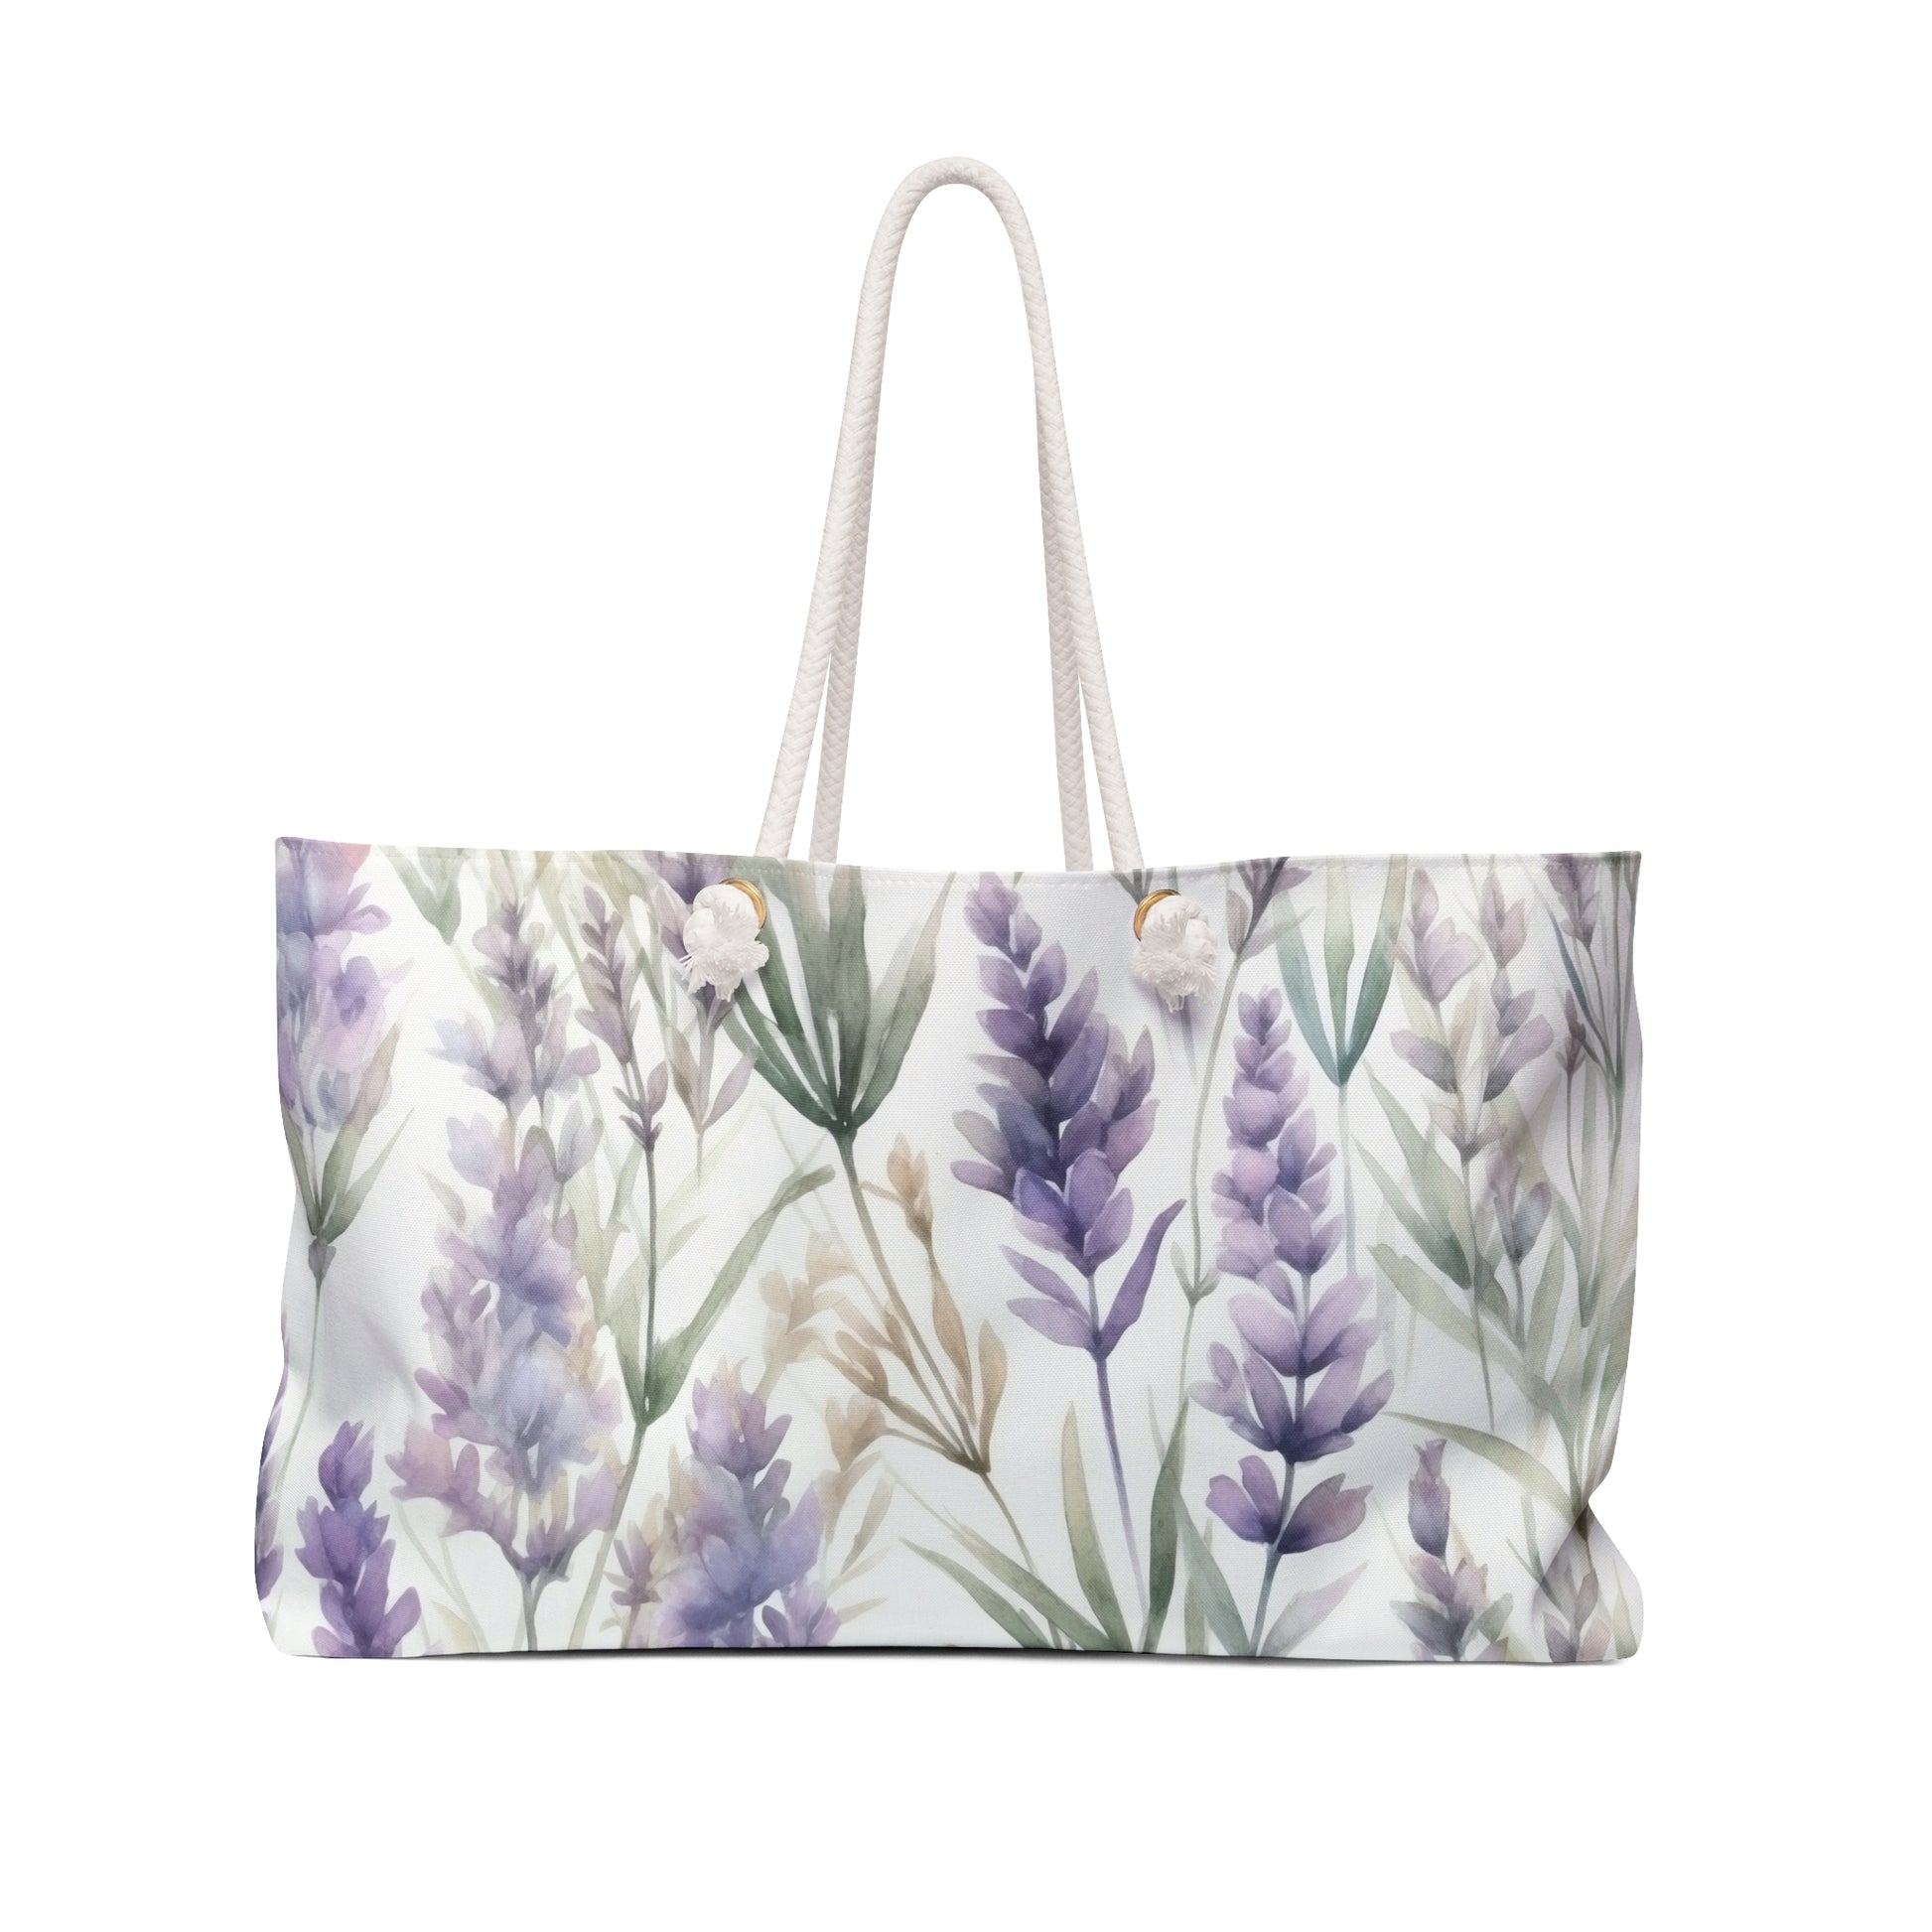 watercolor purple lavender floral tote bag